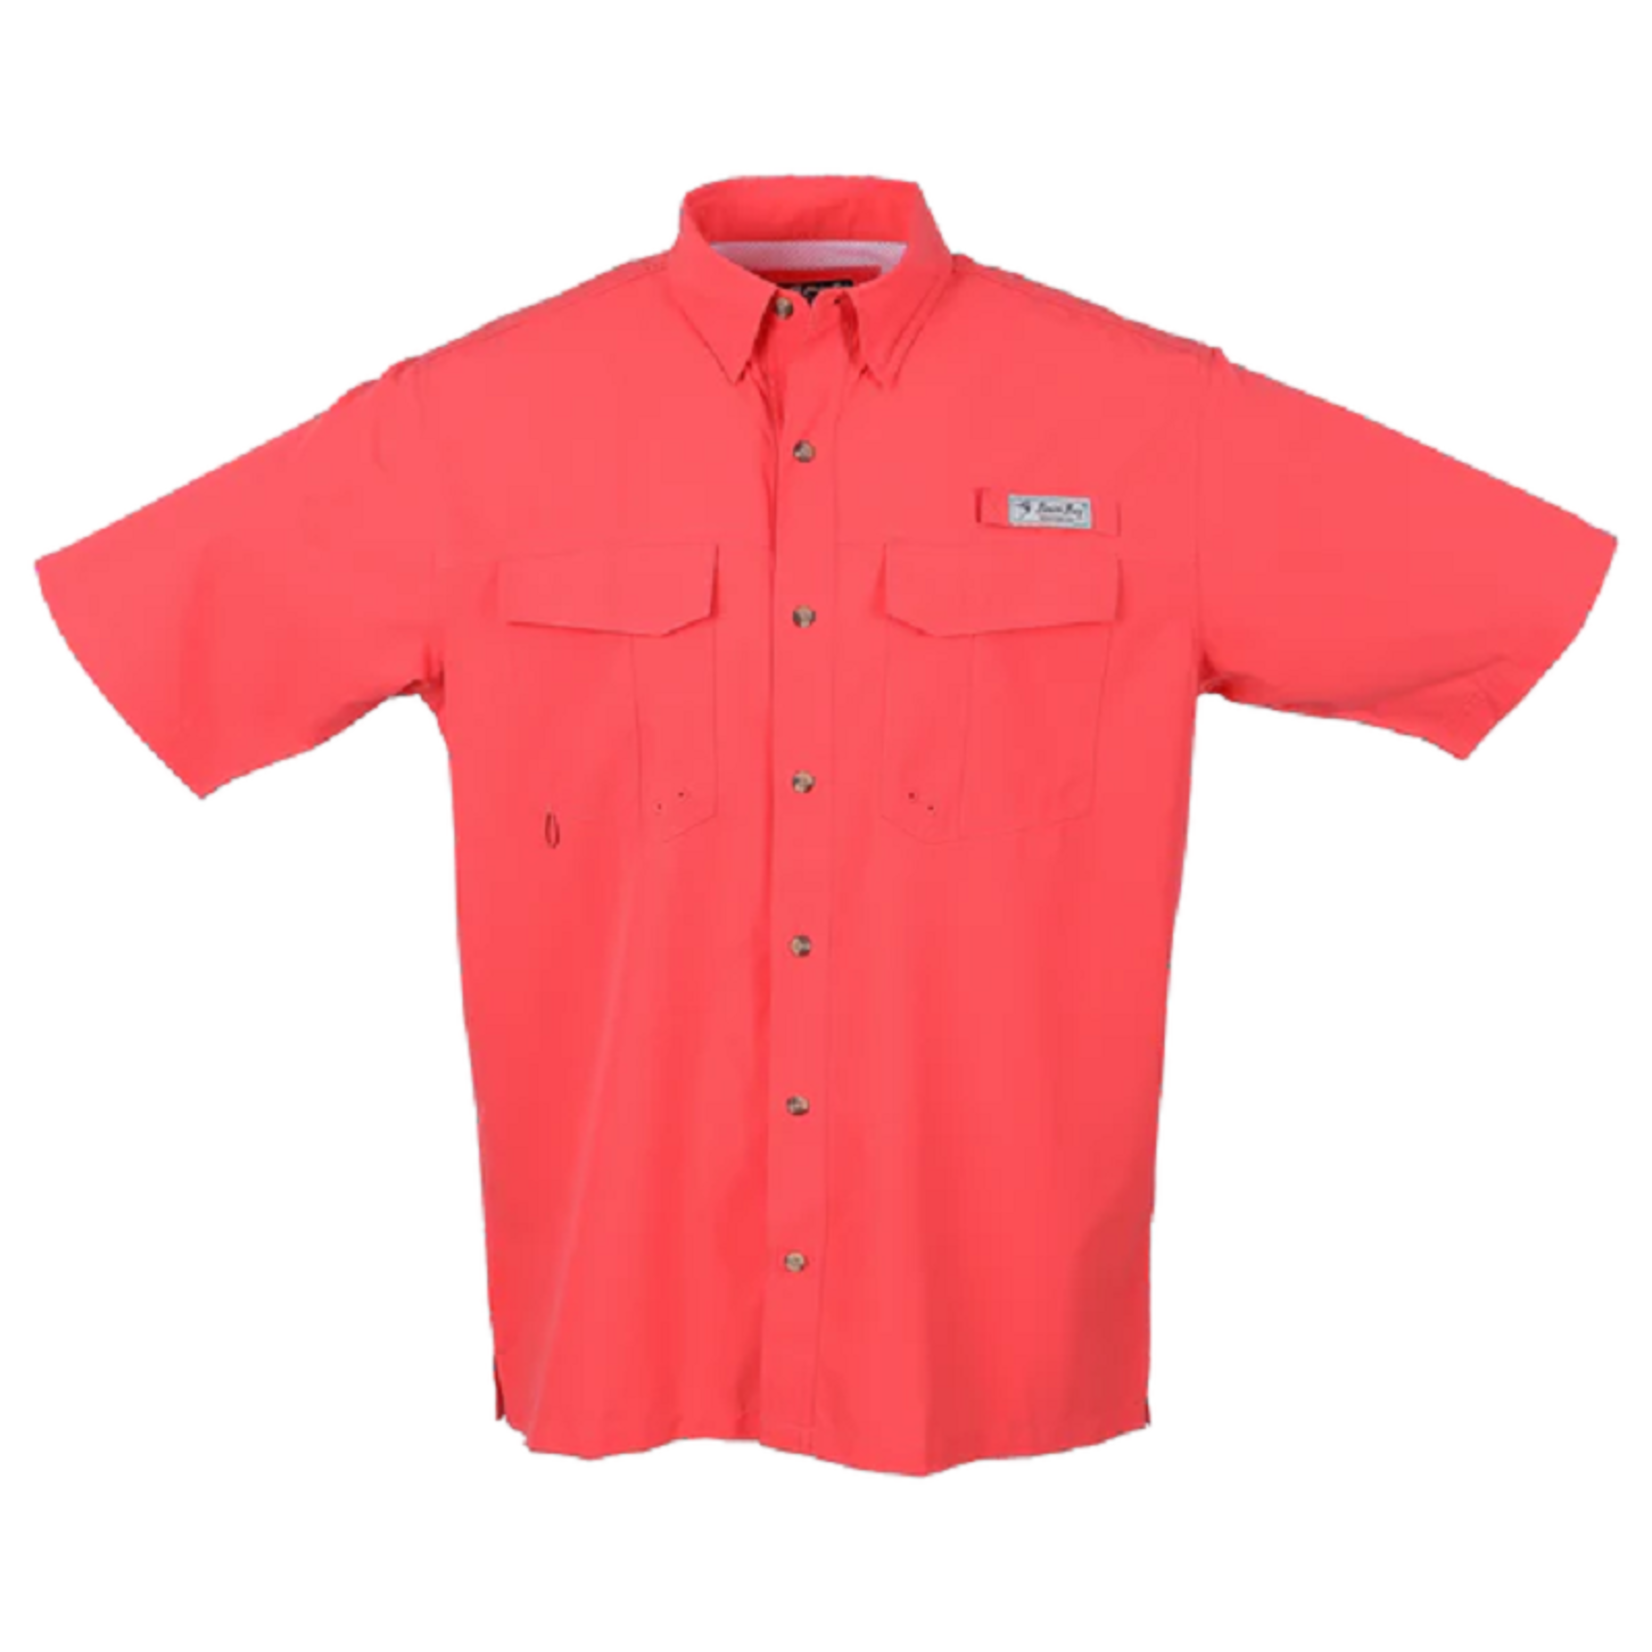 Bimini Bay - Flats V S/S Shirt (11701-23) - Ford and McIntyre Men's Wear